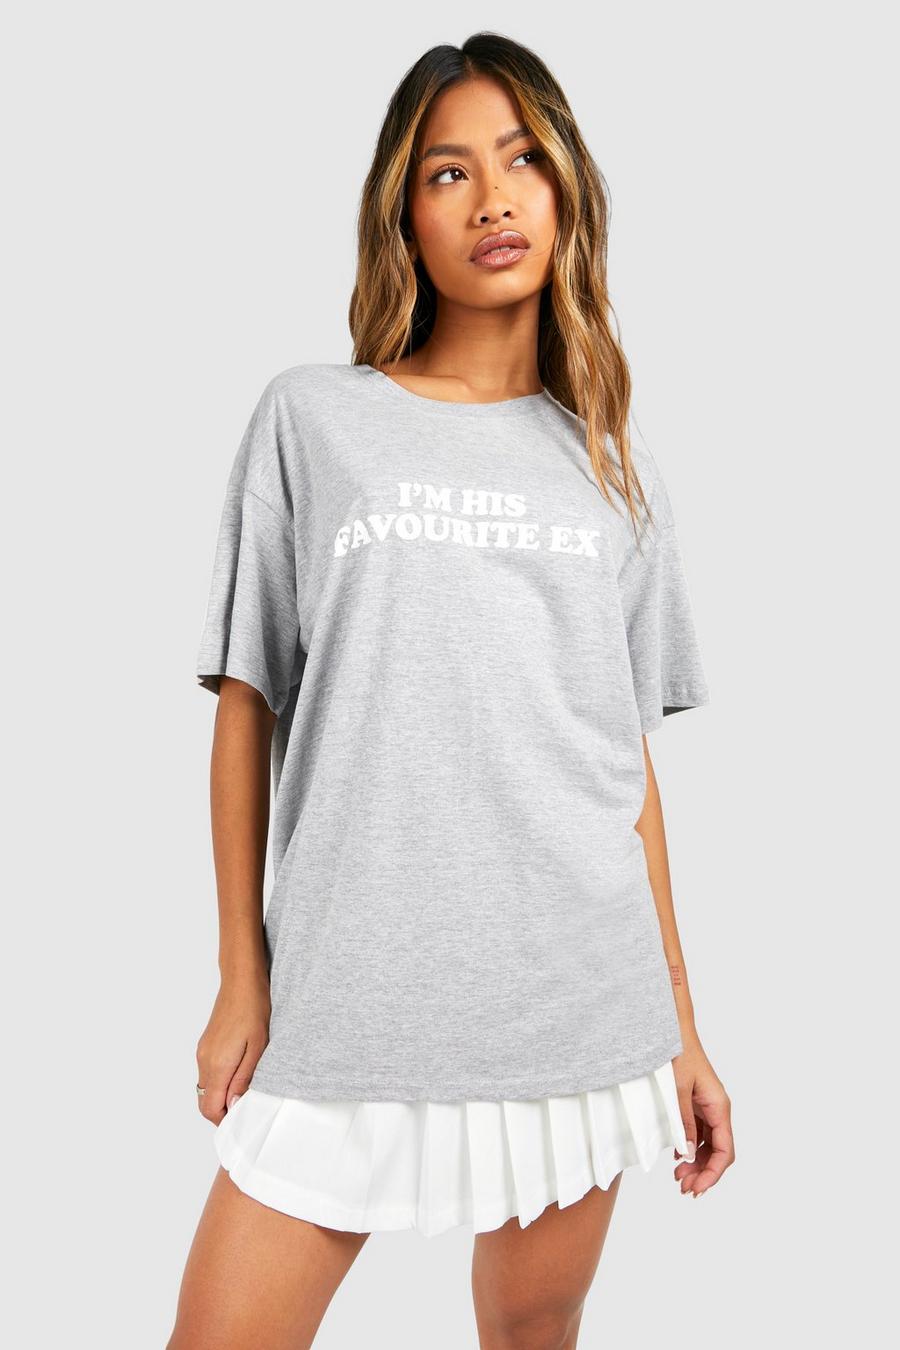 Oversize Baumwoll T-Shirt mit I‘m His Favourite Print, Grey